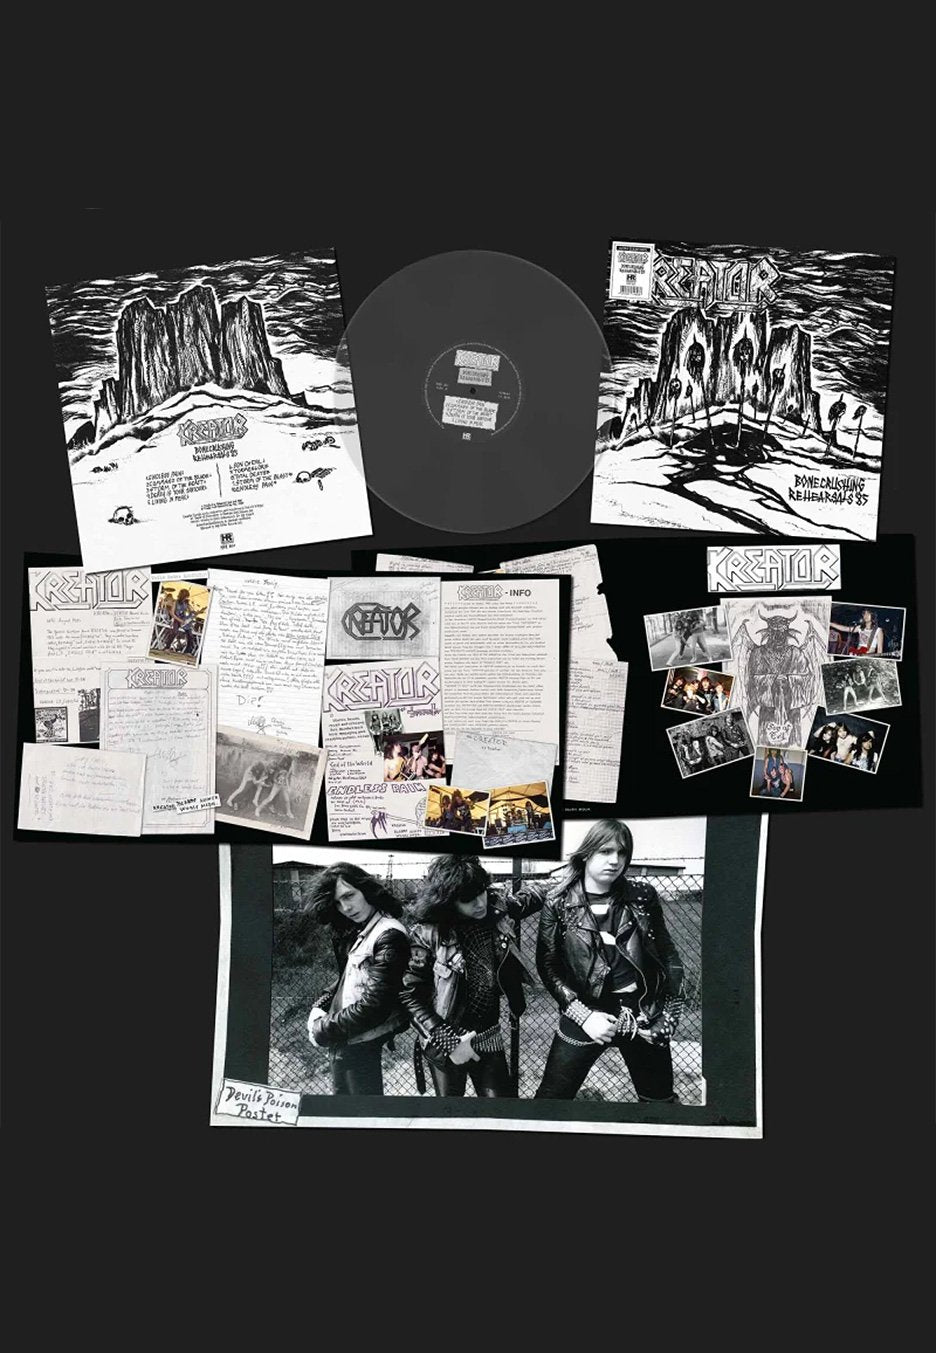 Kreator - Bonecrushing Rehearsals '85 Ltd. Trans Ultra Clear - Colored Vinyl